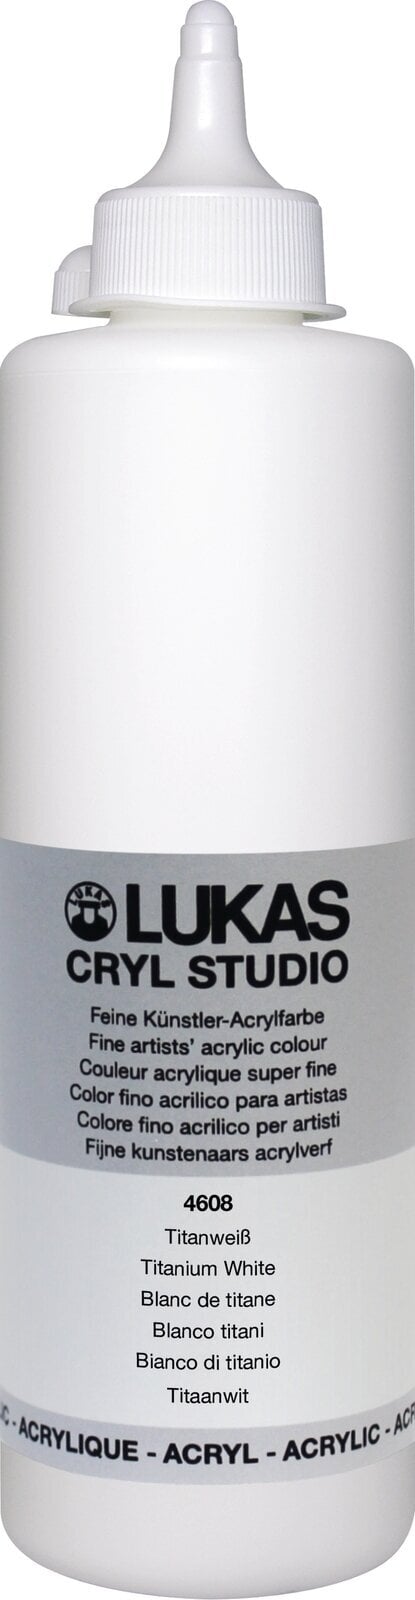 Tinta acrílica Lukas Cryl Studio Plastic Bottle Tinta acrílica Titanium White 500 ml 1 un.